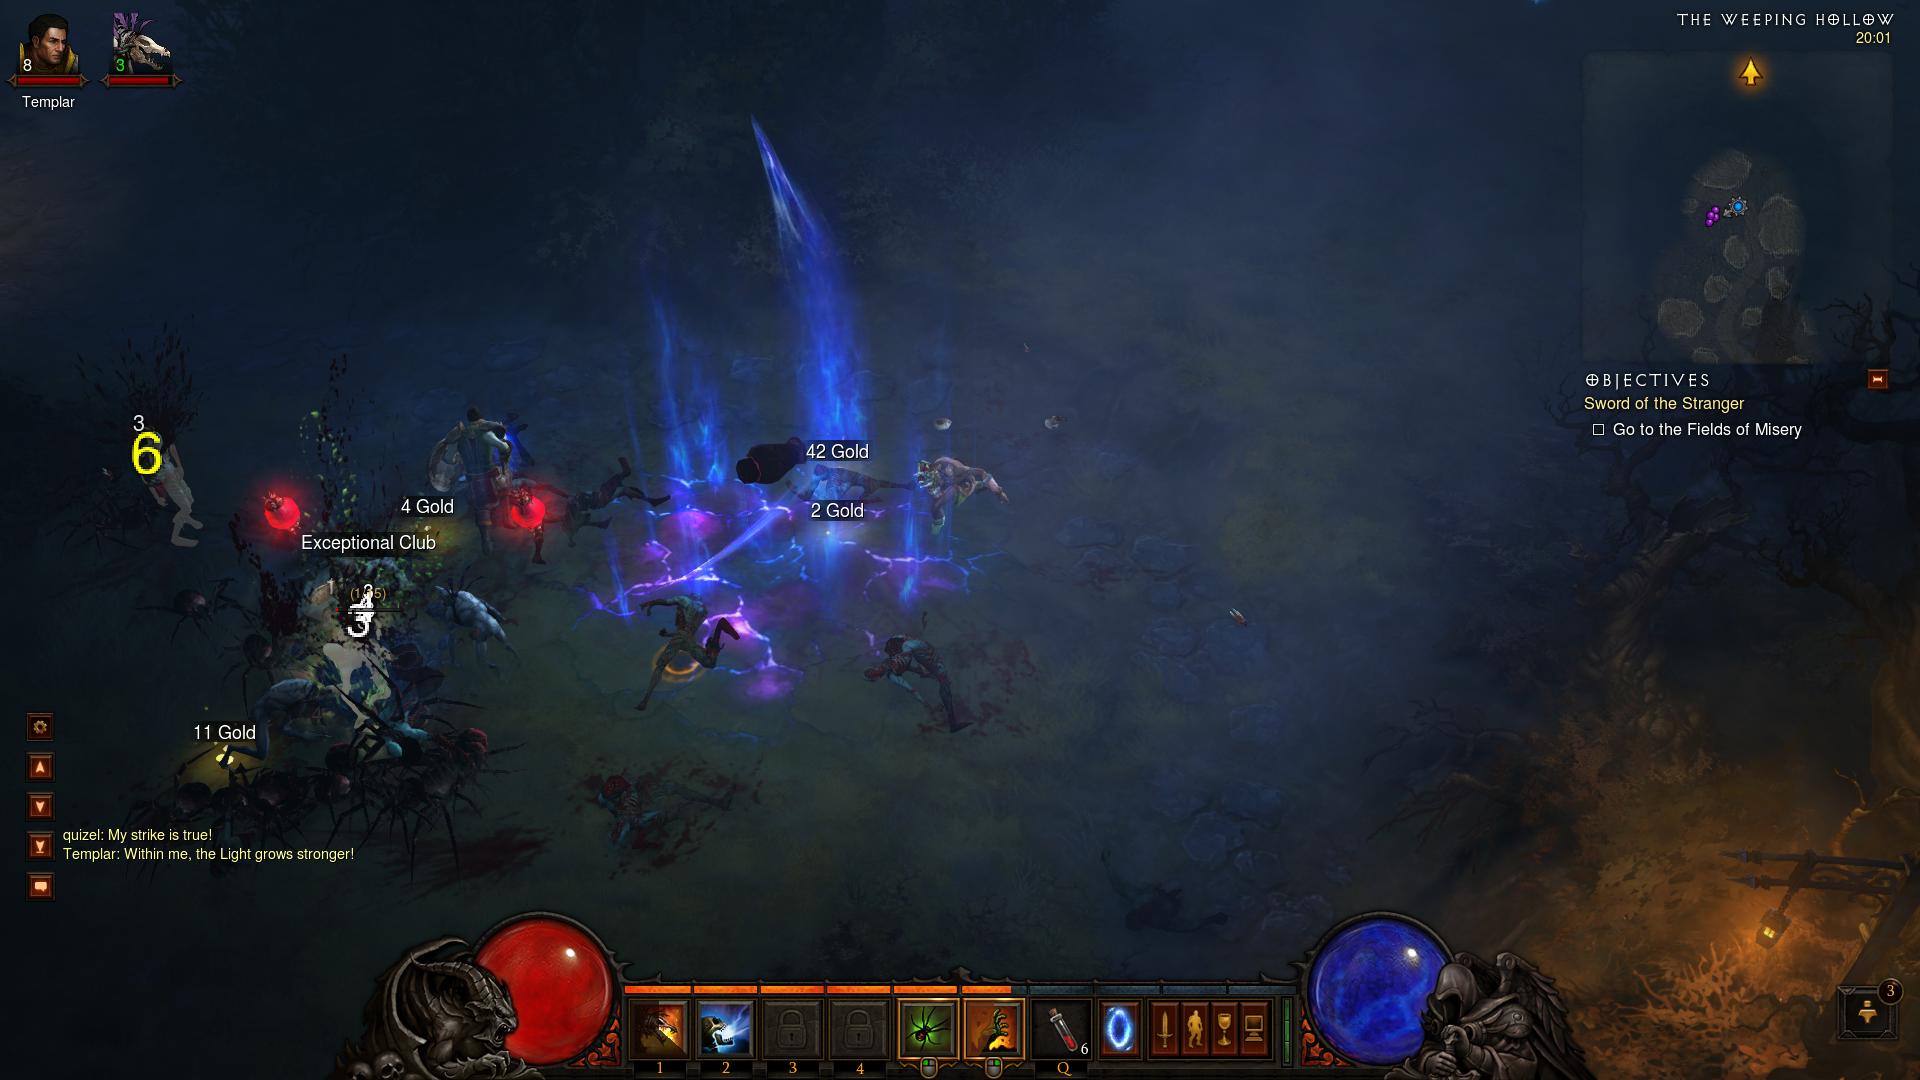 Sword of the Stranger Diablo 3 d3 screenshot - Gamingcfg.com